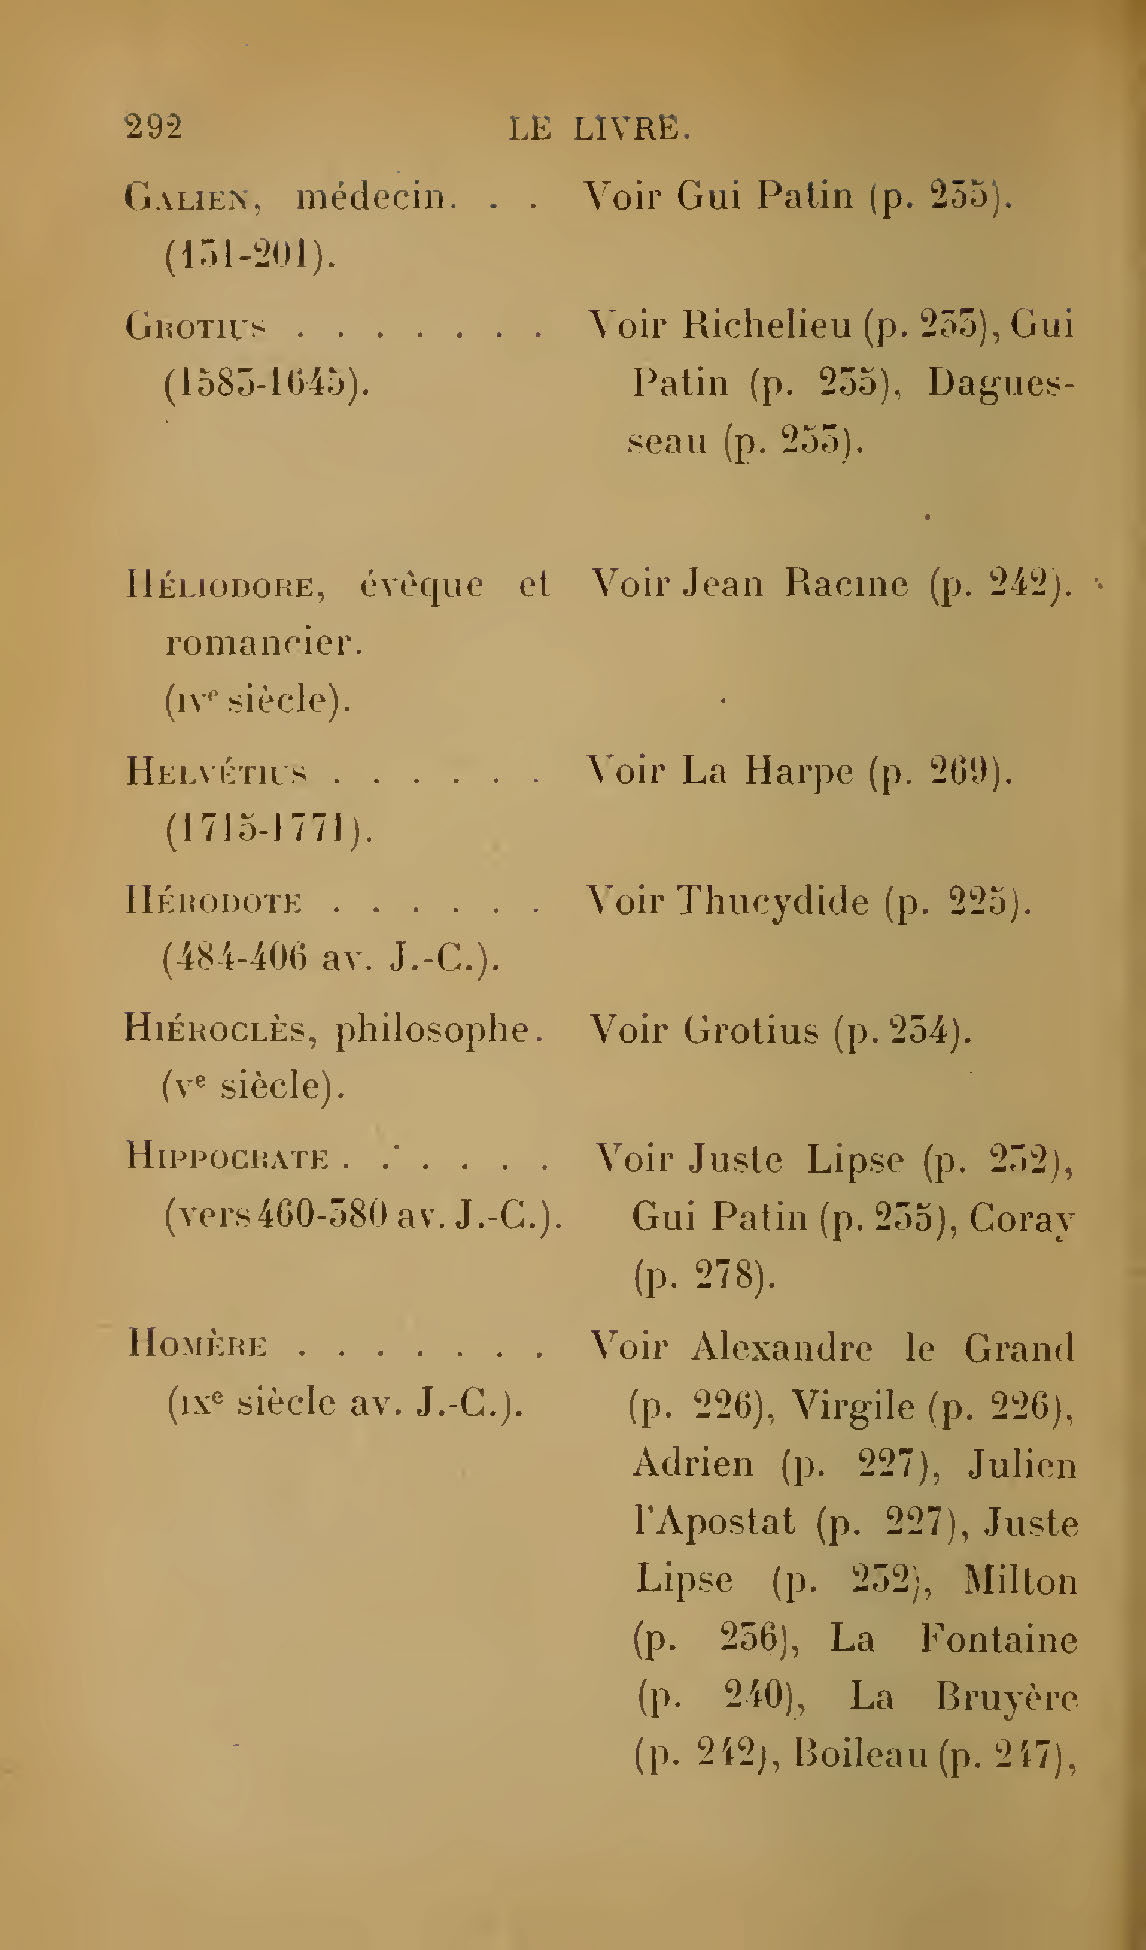 Albert Cim, Le Livre, t. I, p. 292.